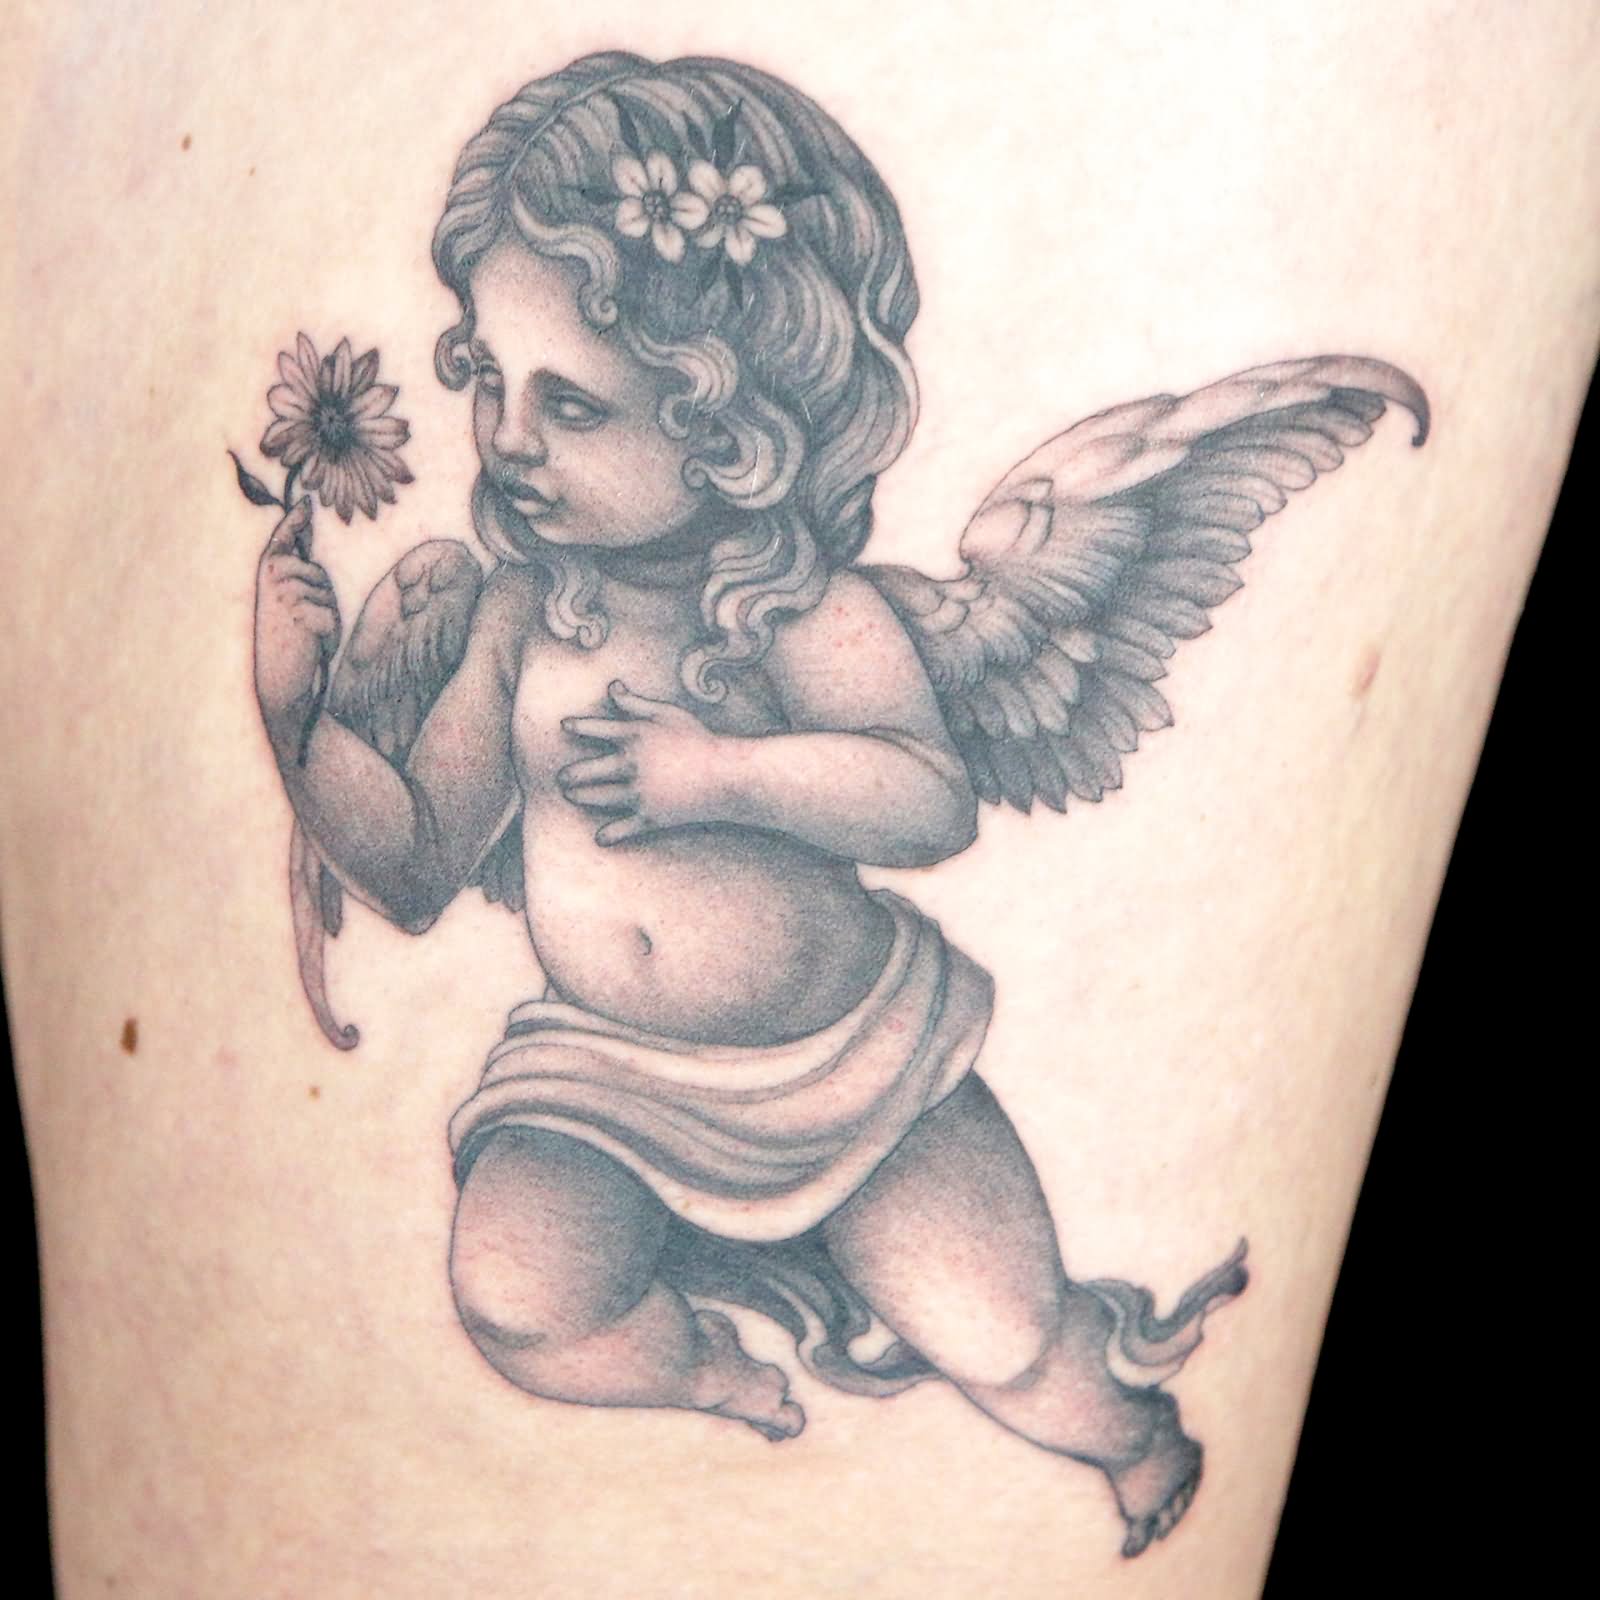 Cherub With Flower Tattoo By Erin Chance of Unkindness Art